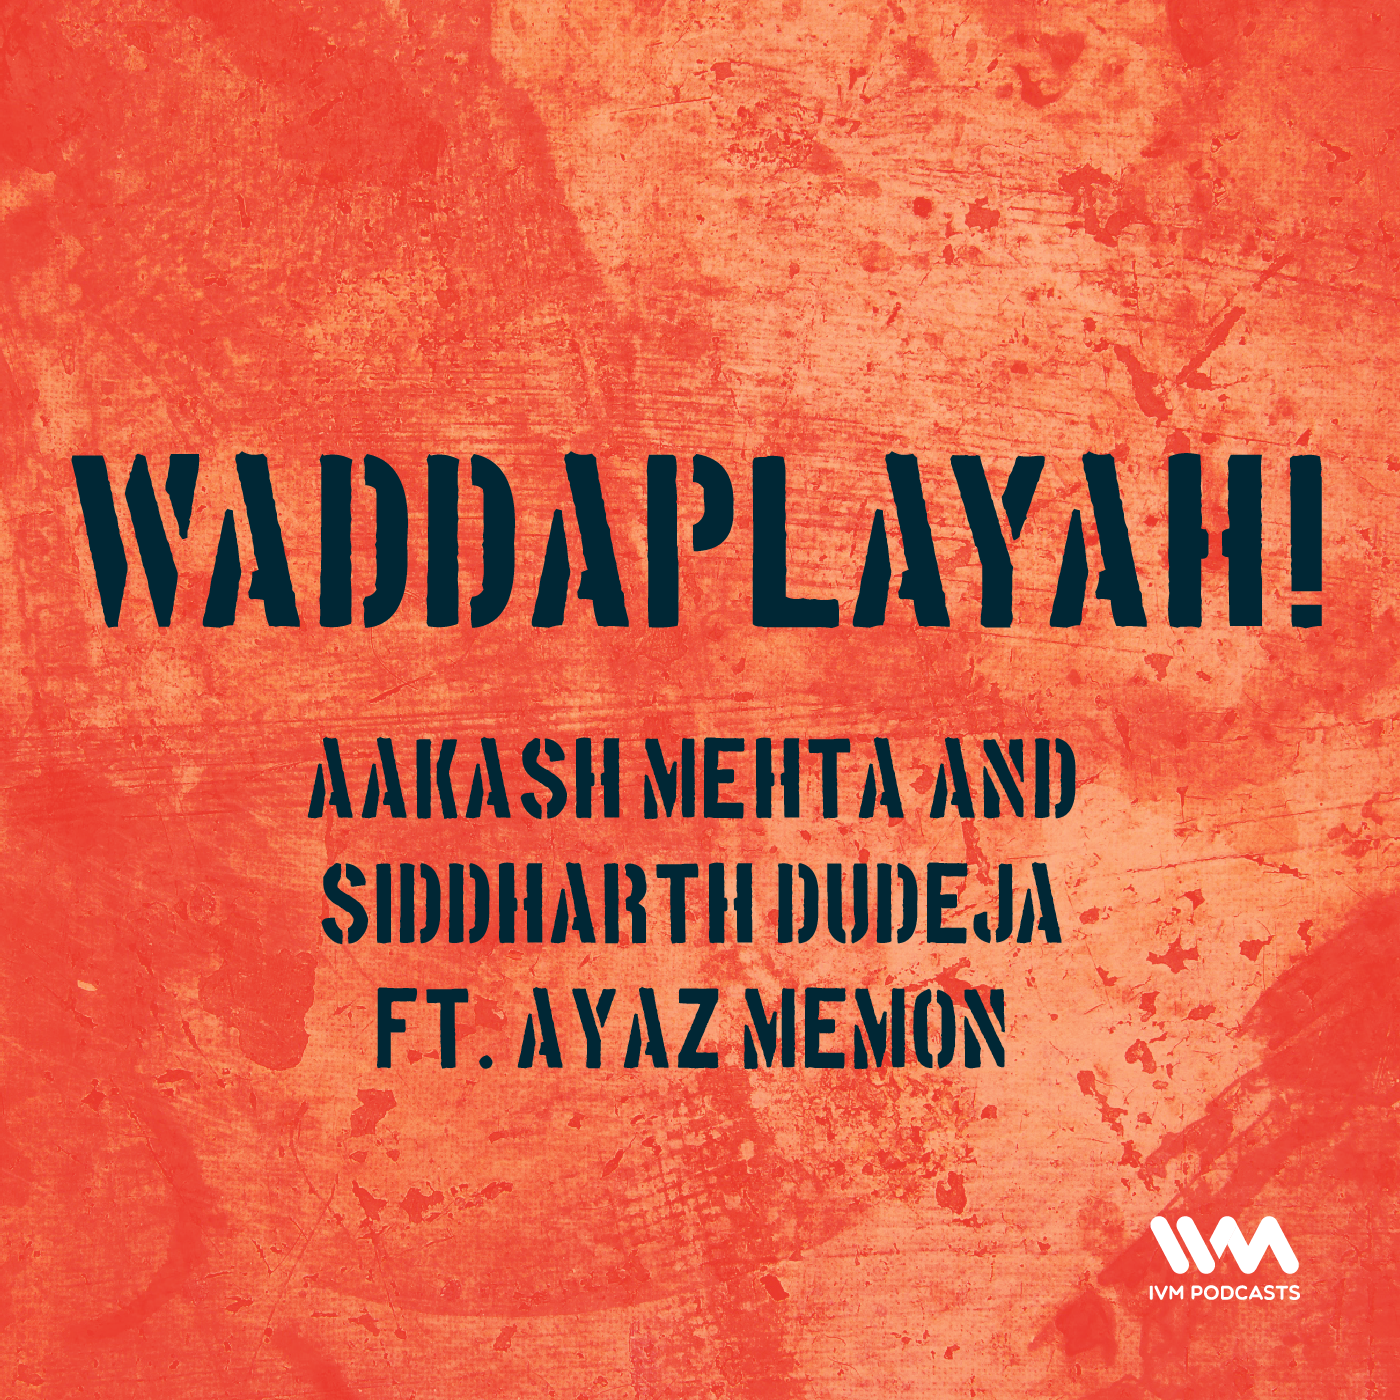 Ep. 06: Aakash Mehta and Siddharth Dudeja ft. Ayaz Memon